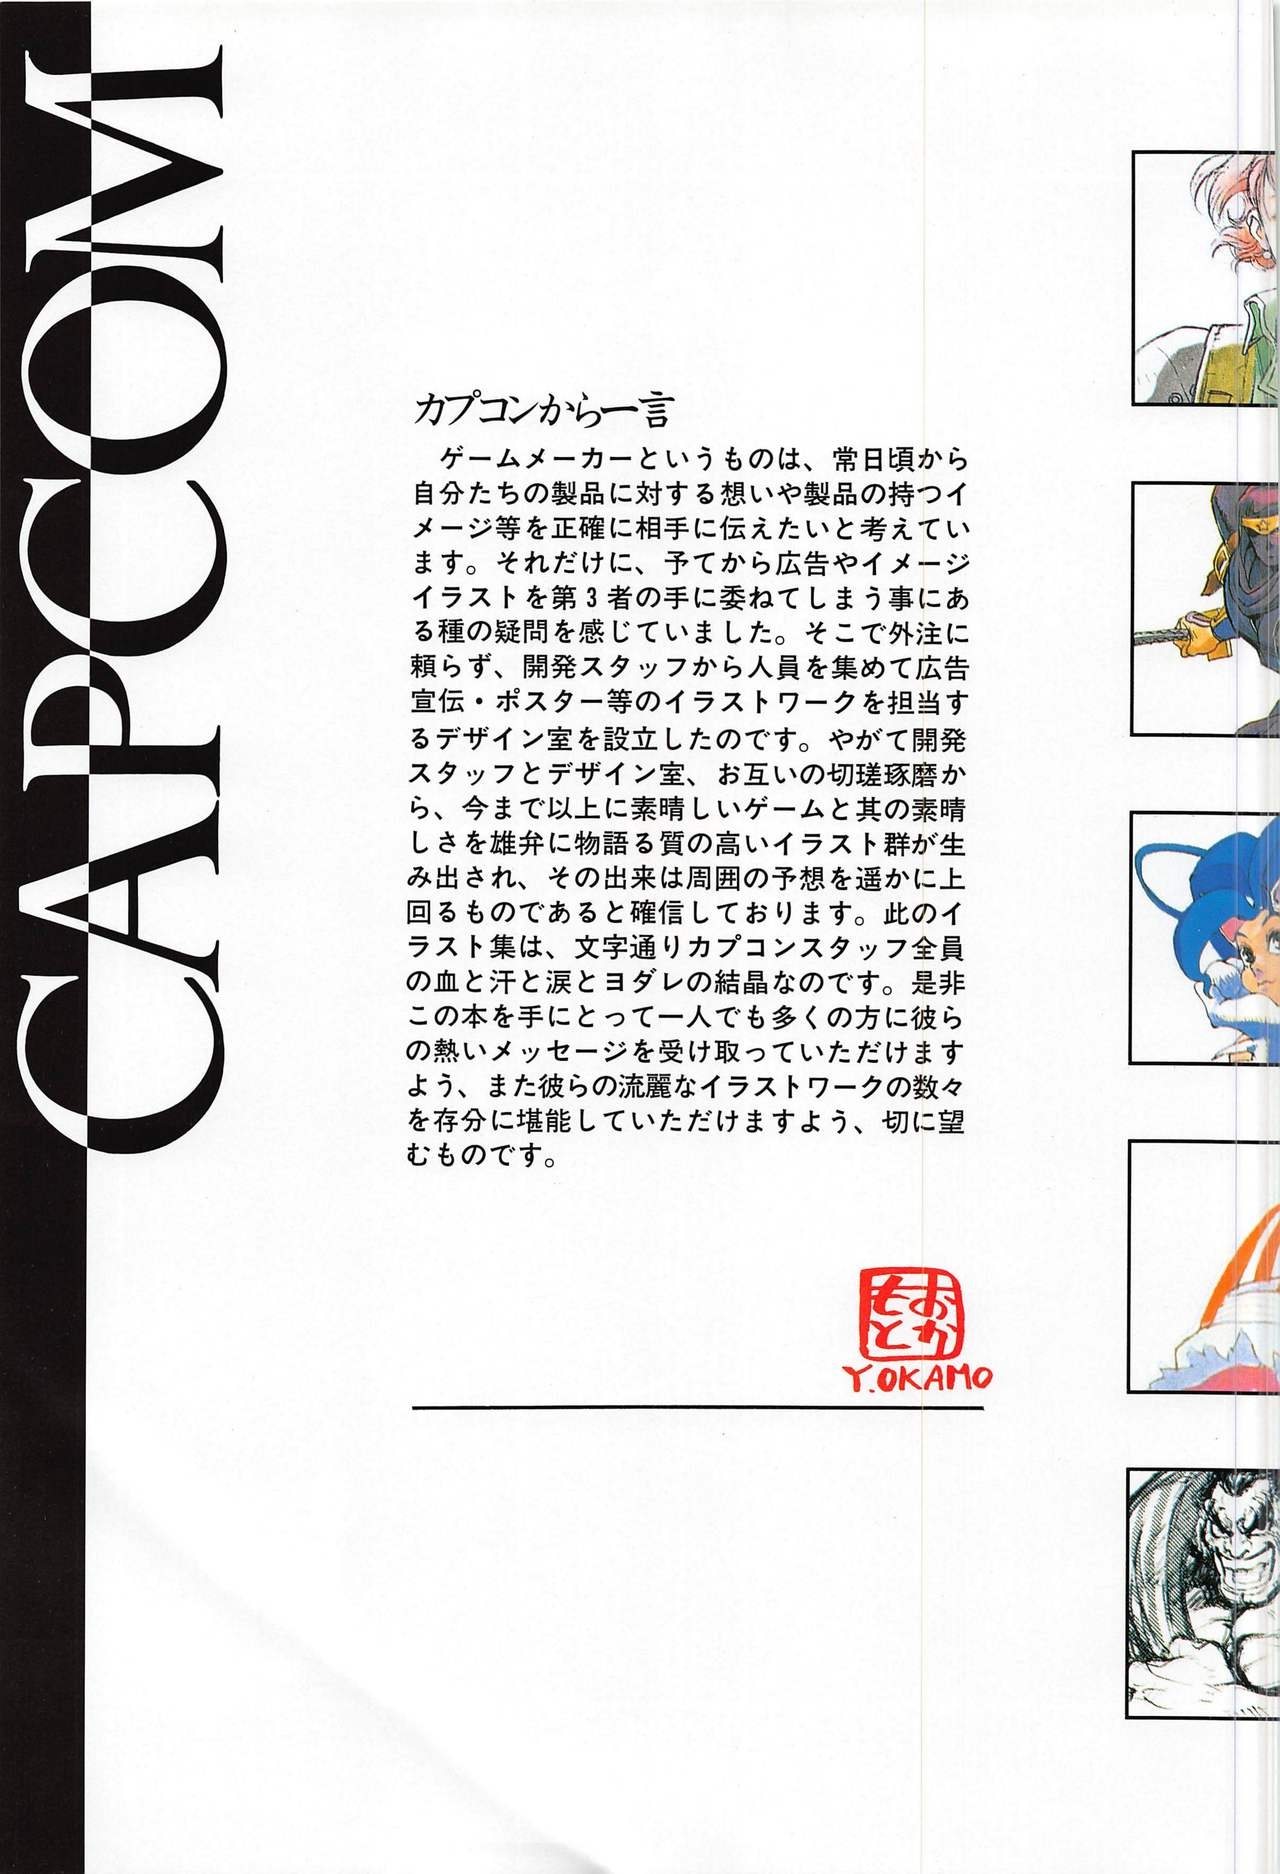 Capcom Illustrations - Gamest Mook 17  [High Quality] 5